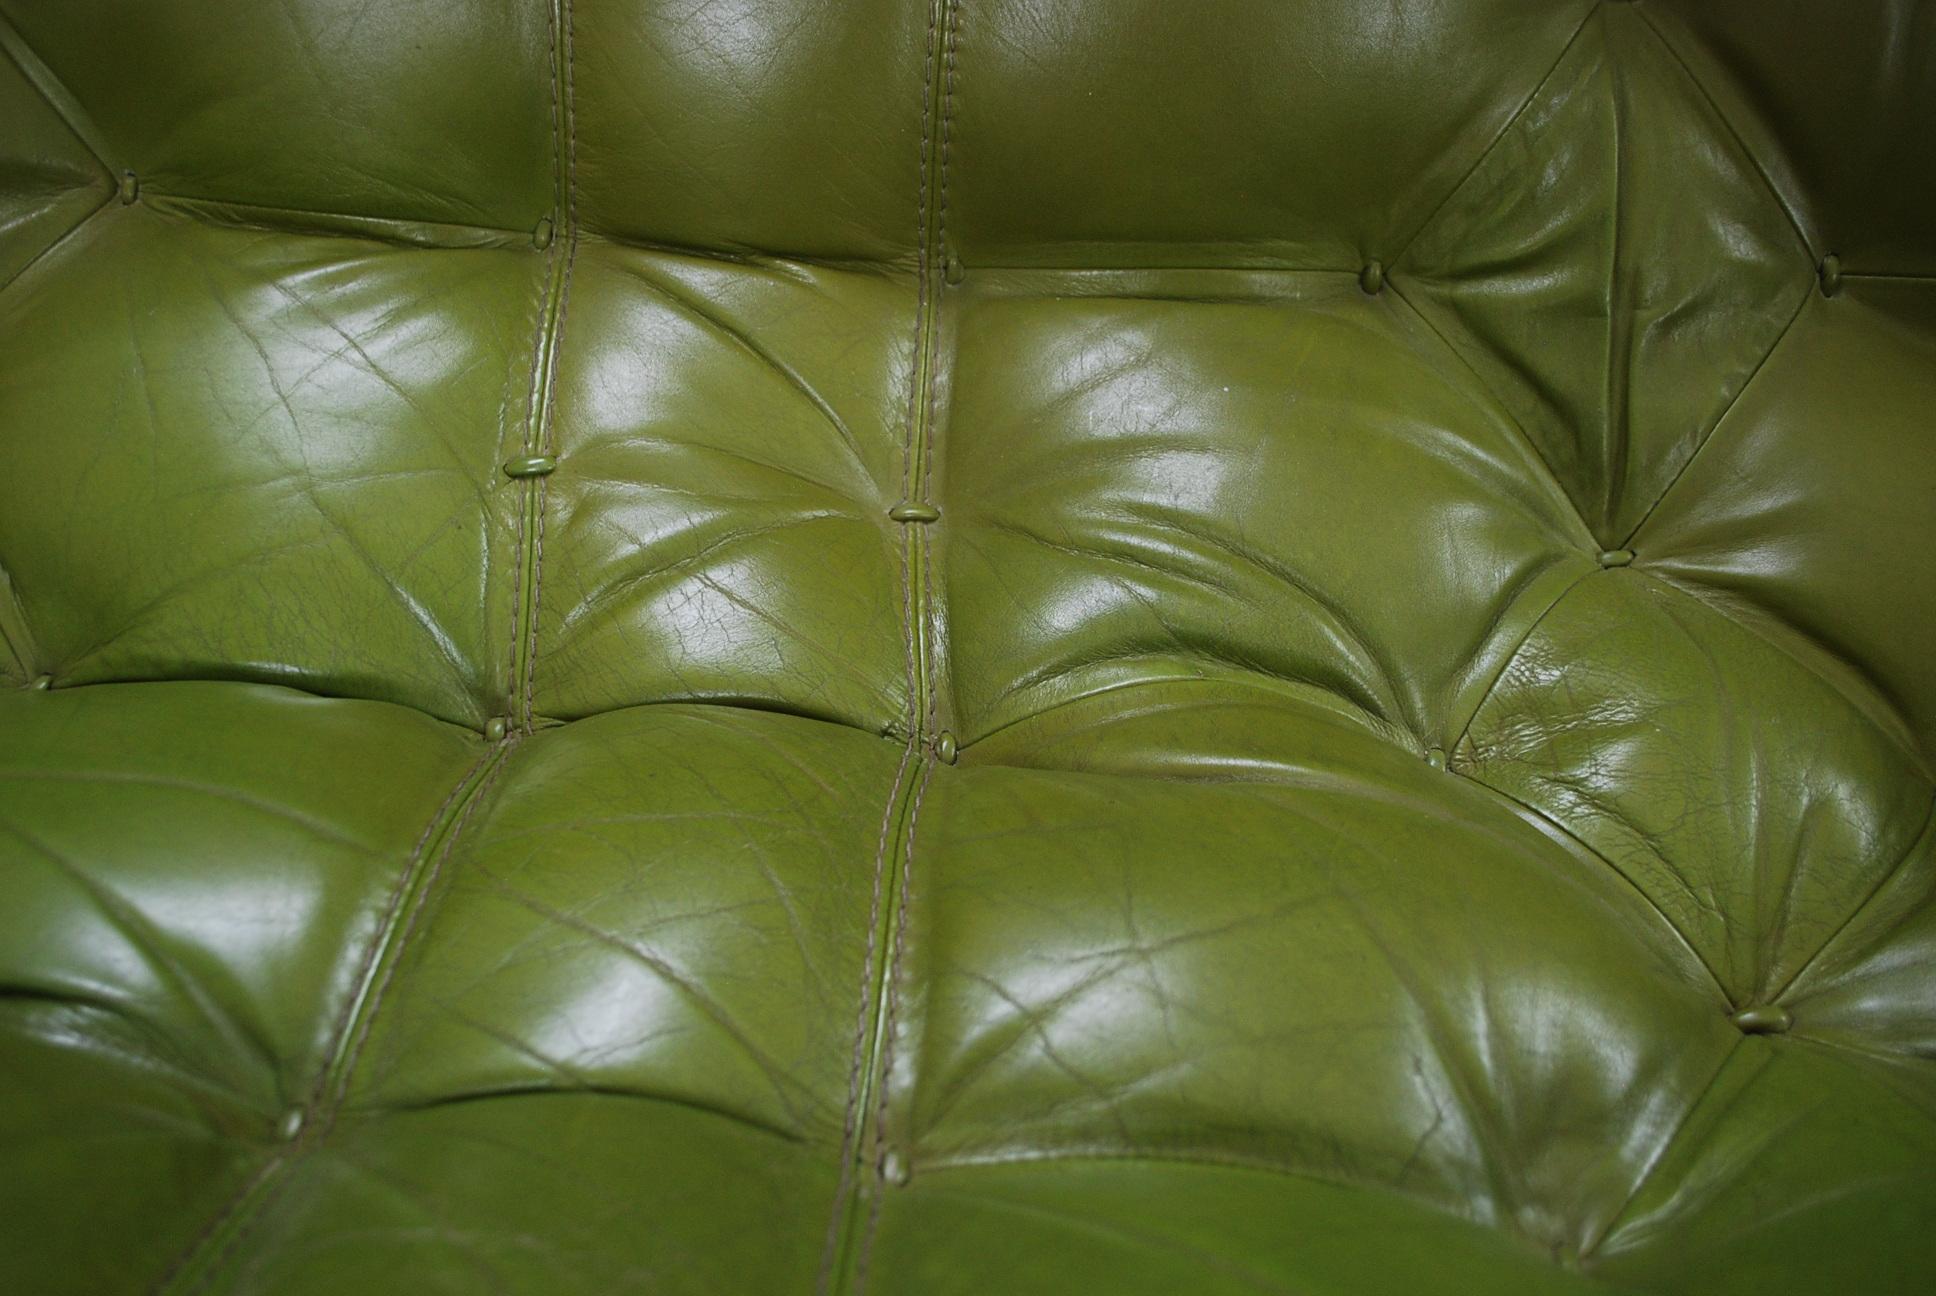 Lacquered Percival Lafer MP 041 Leather Sofa